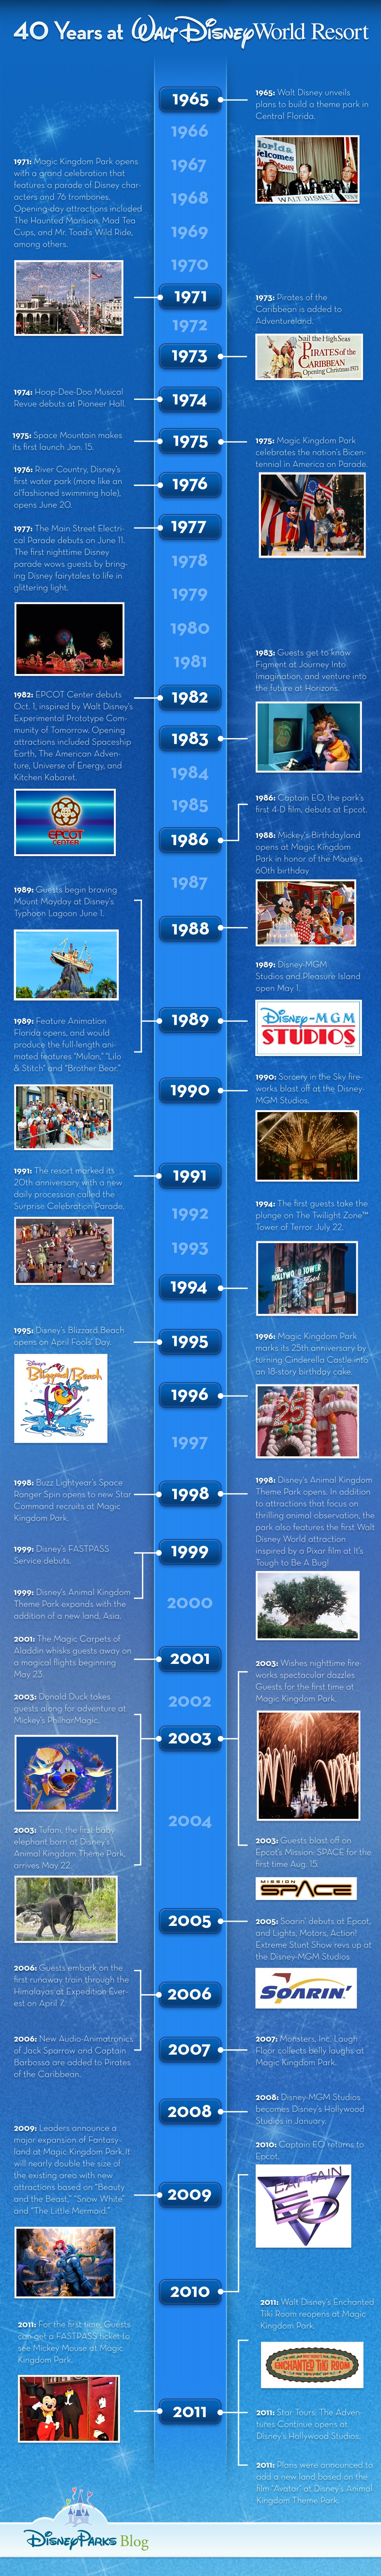 Best Timeline for Planning a Magical Walt Disney World Vacation